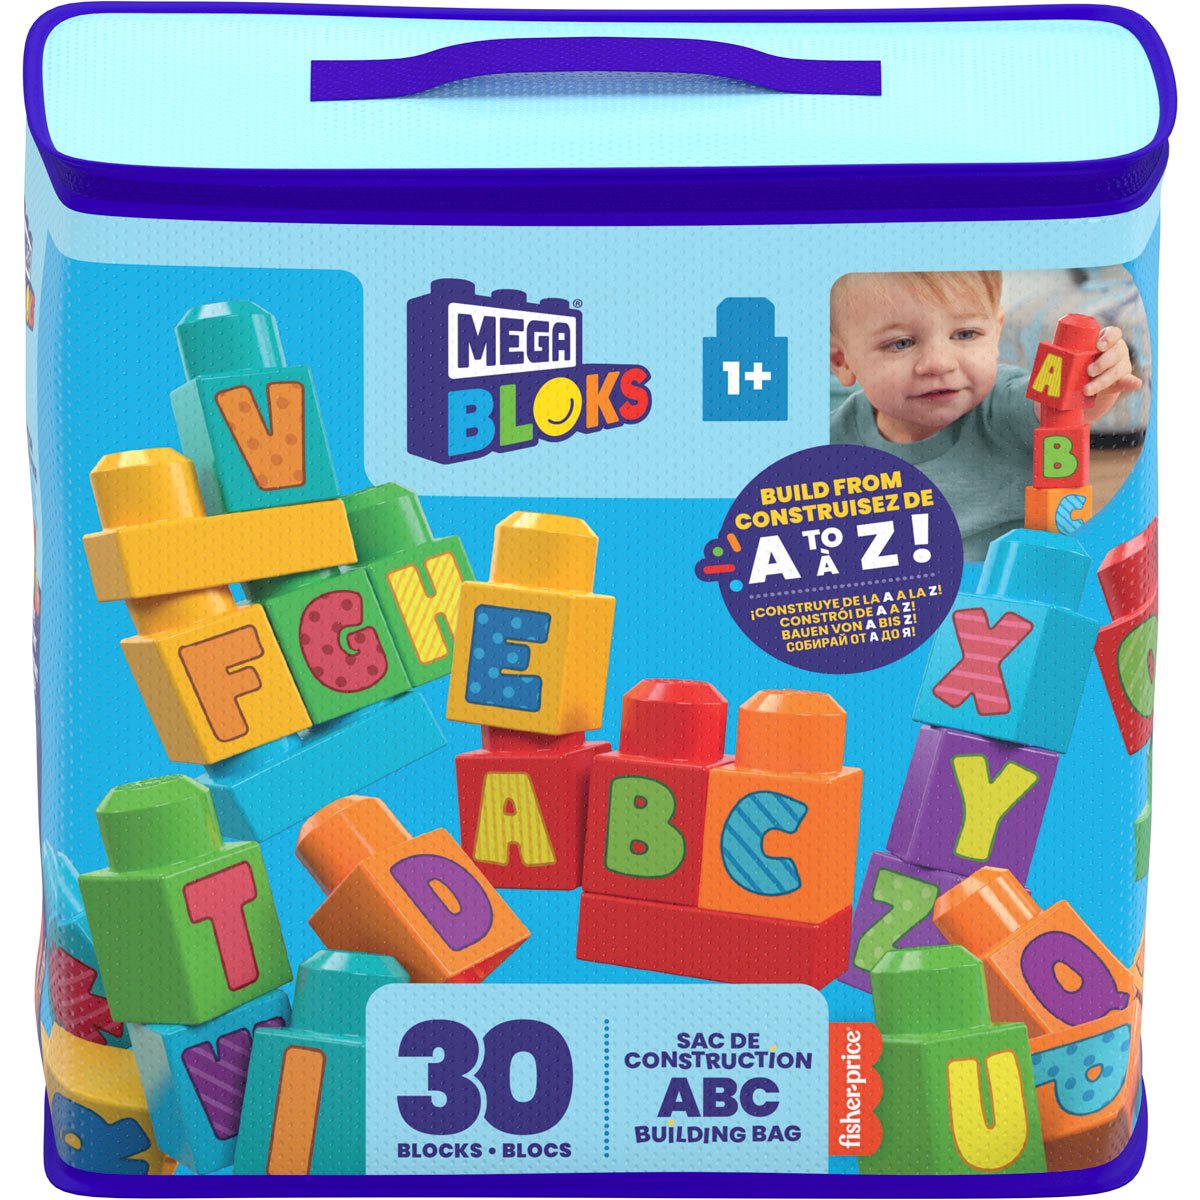  MEGA BLOKS Fisher-Price Toddler Block Toys, Deluxe